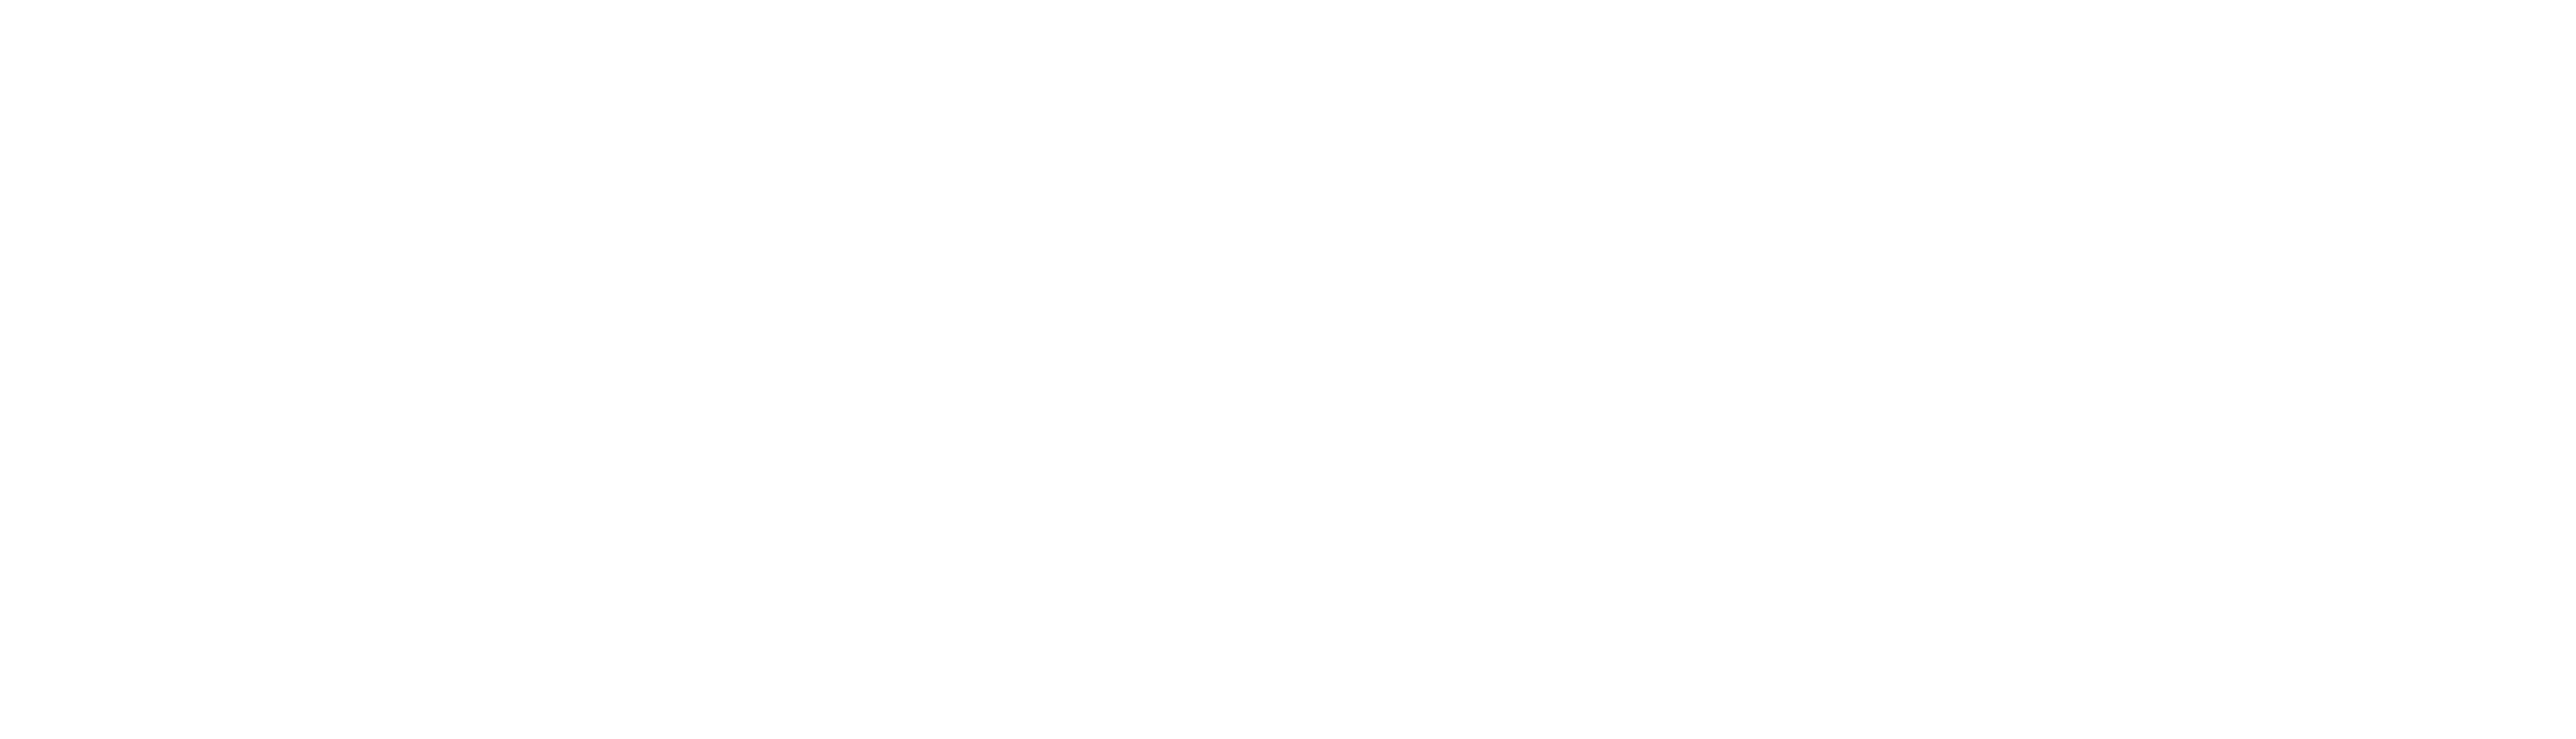 Peter's Caffe